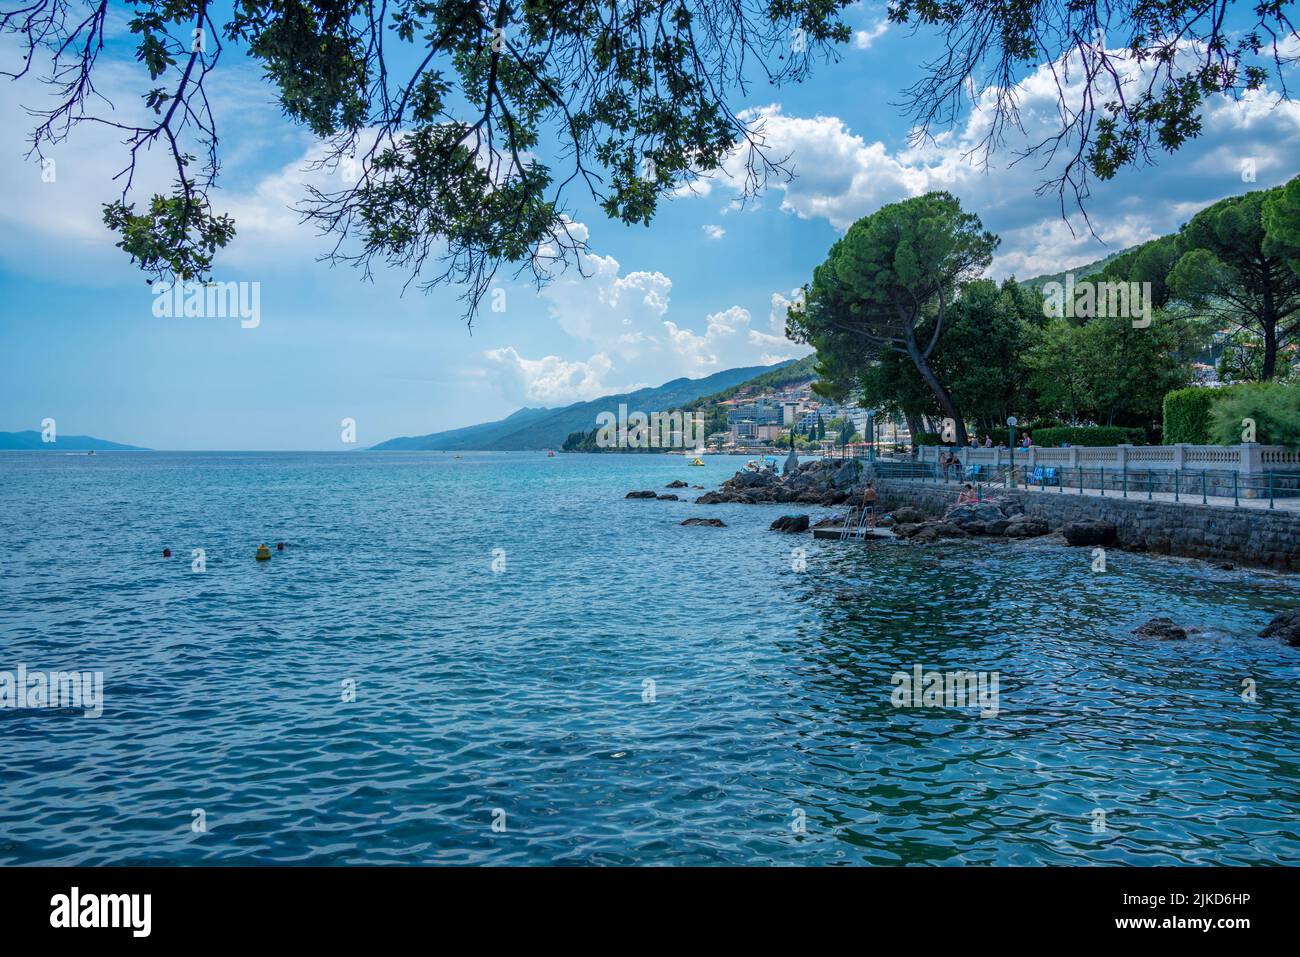 View of coastal walk path with town of Opatija in background, Opatija, Kvarner Bay, Croatia, Europe Stock Photo